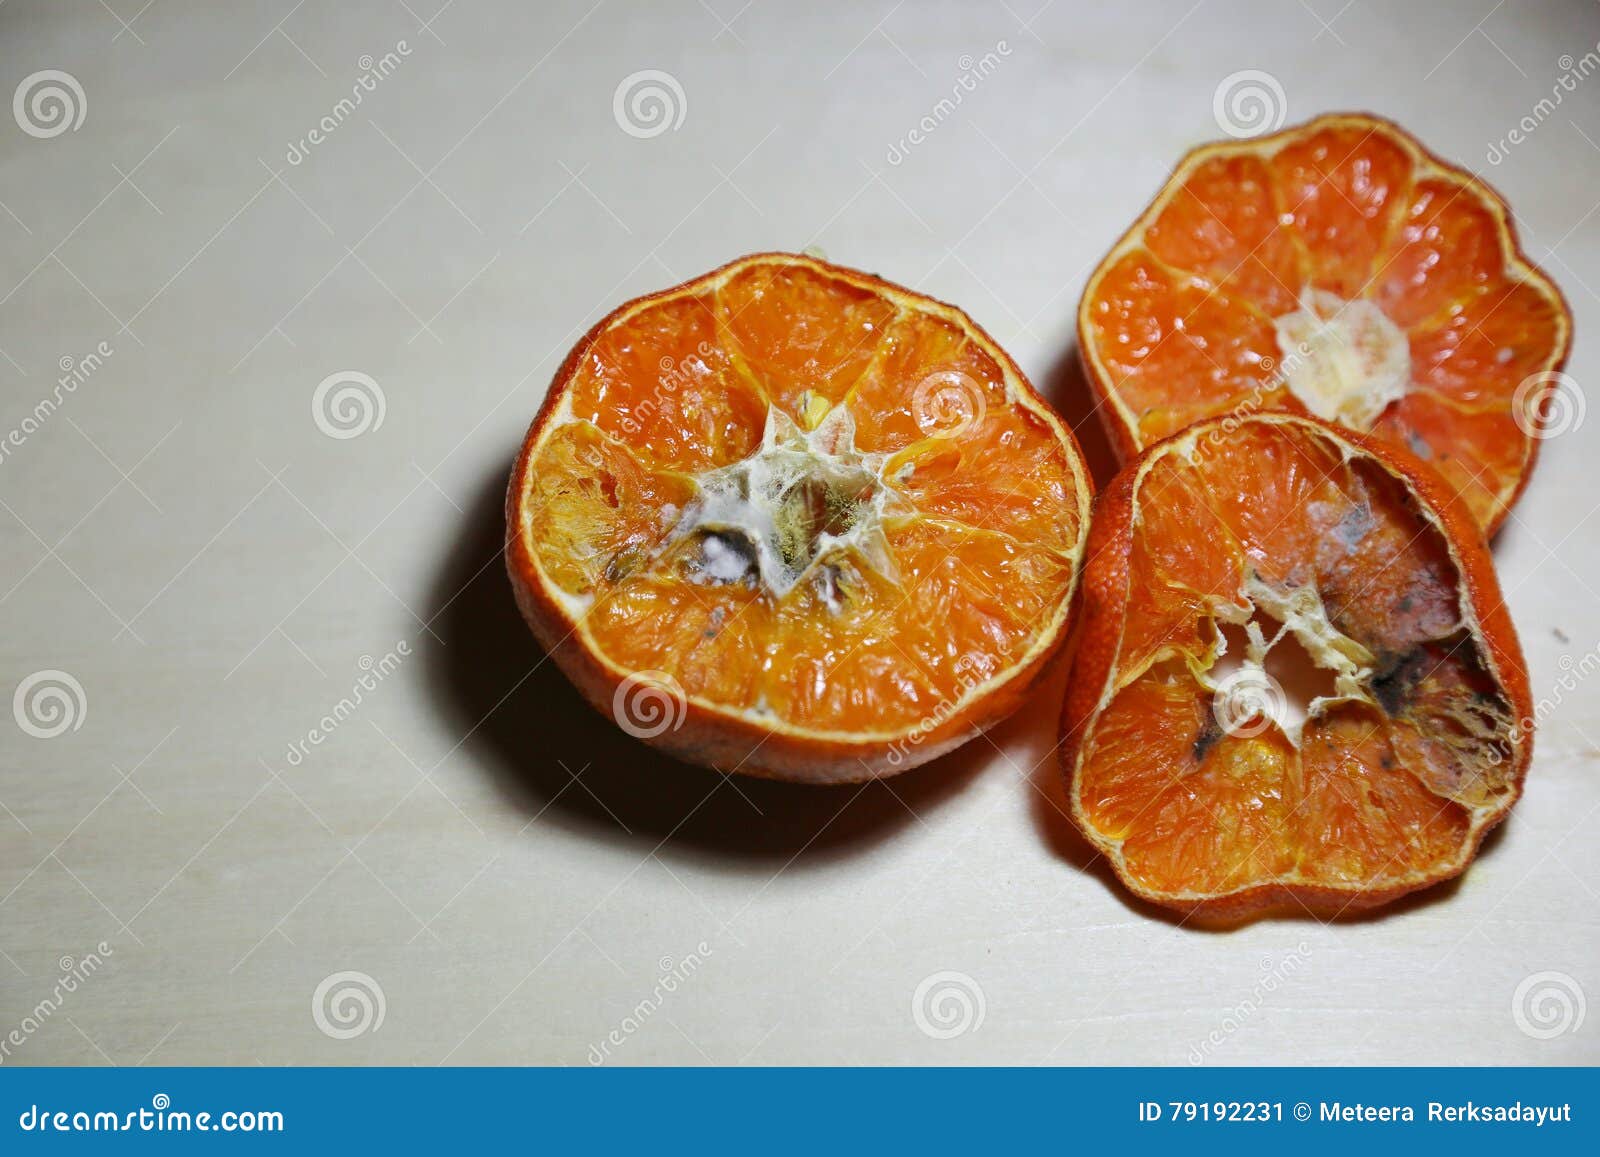 spoiled-orange-expired-food-picture-spioled-79192231.jpg